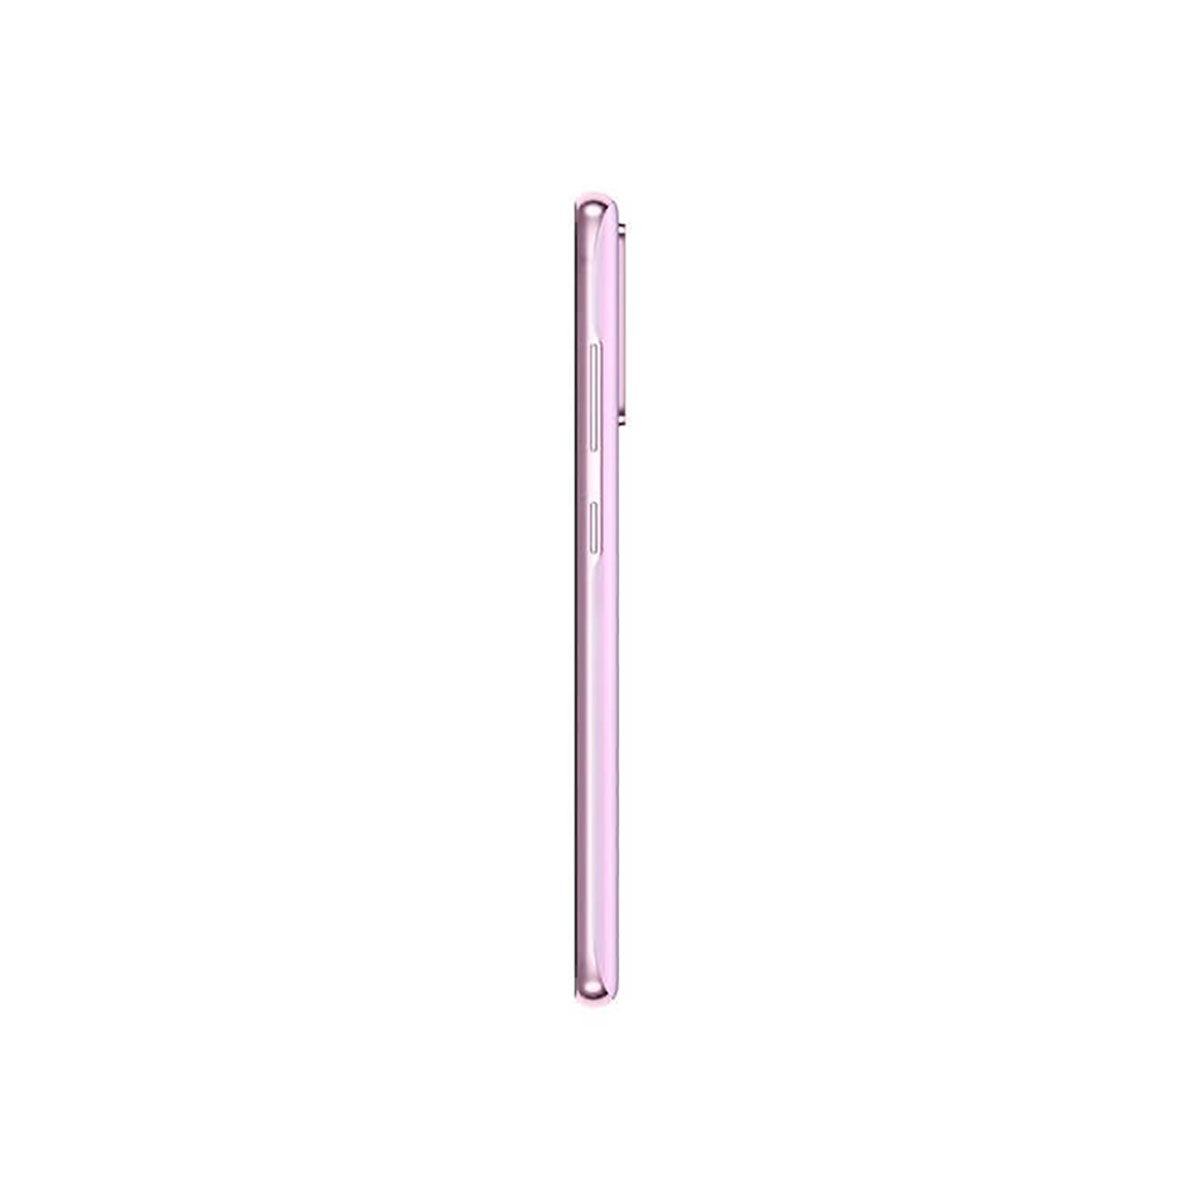 Samsung Galaxy S20 FE 5G 6Go/128Go Violet (Lavande) Double SIM G781B